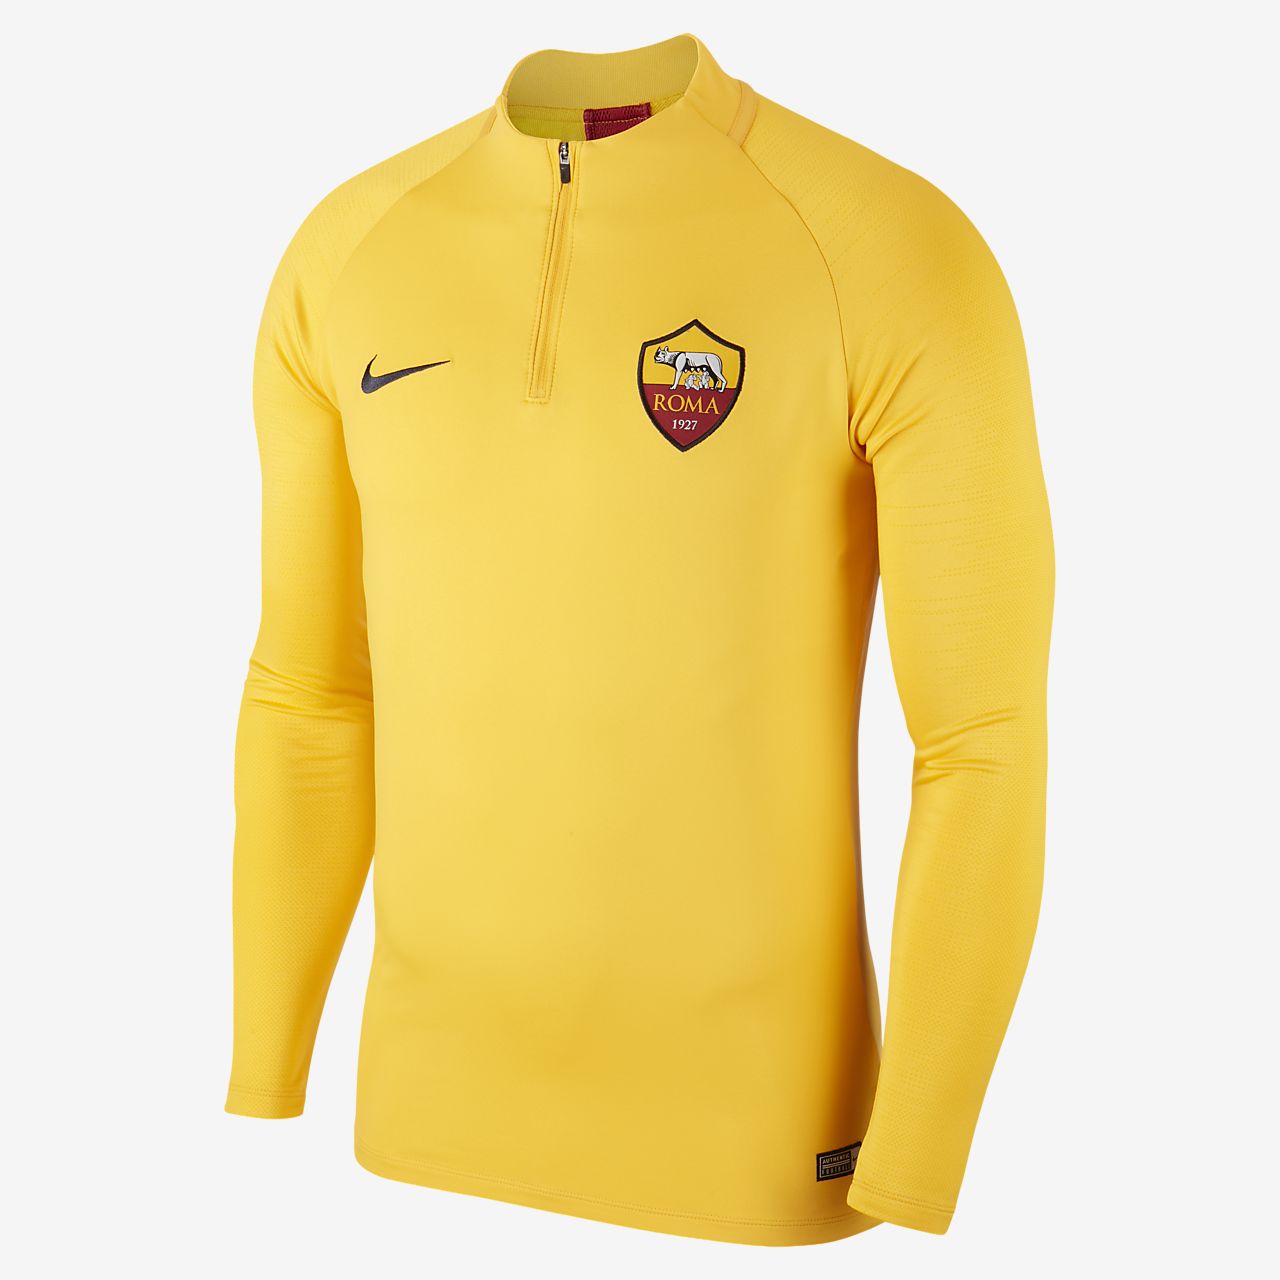 as roma yellow jersey